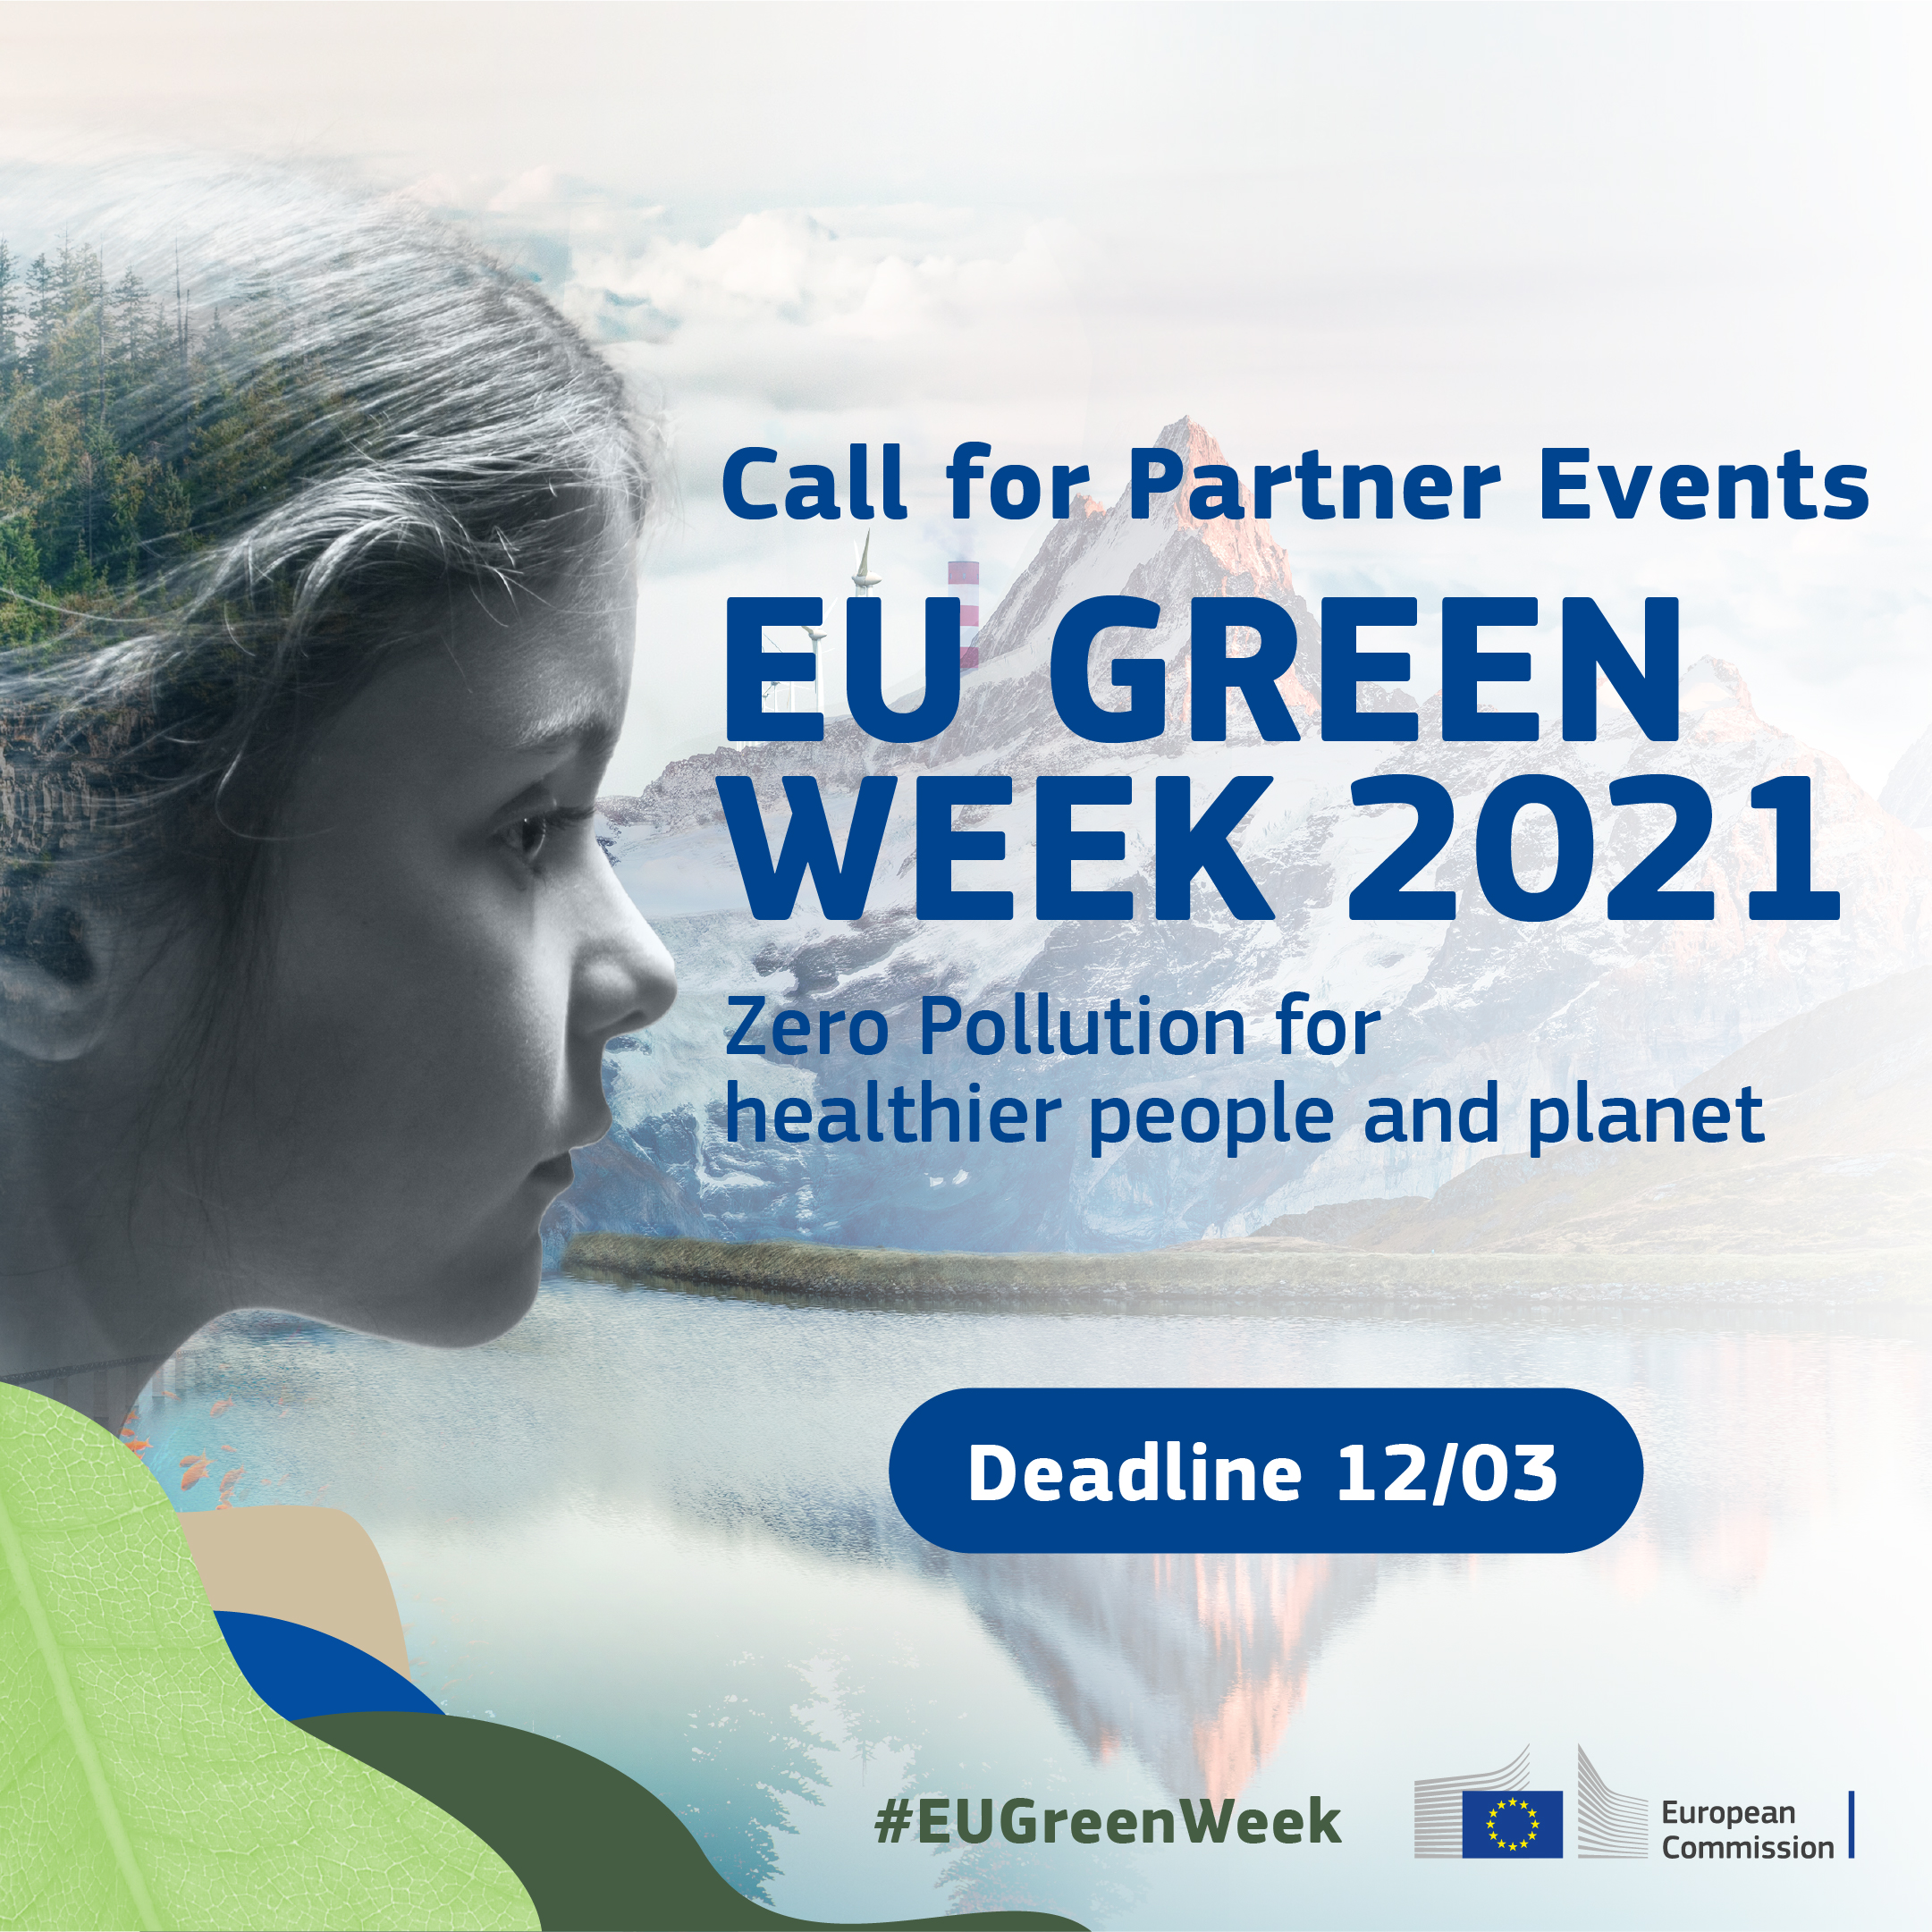 EU Green Week 2021 Partner Events Call